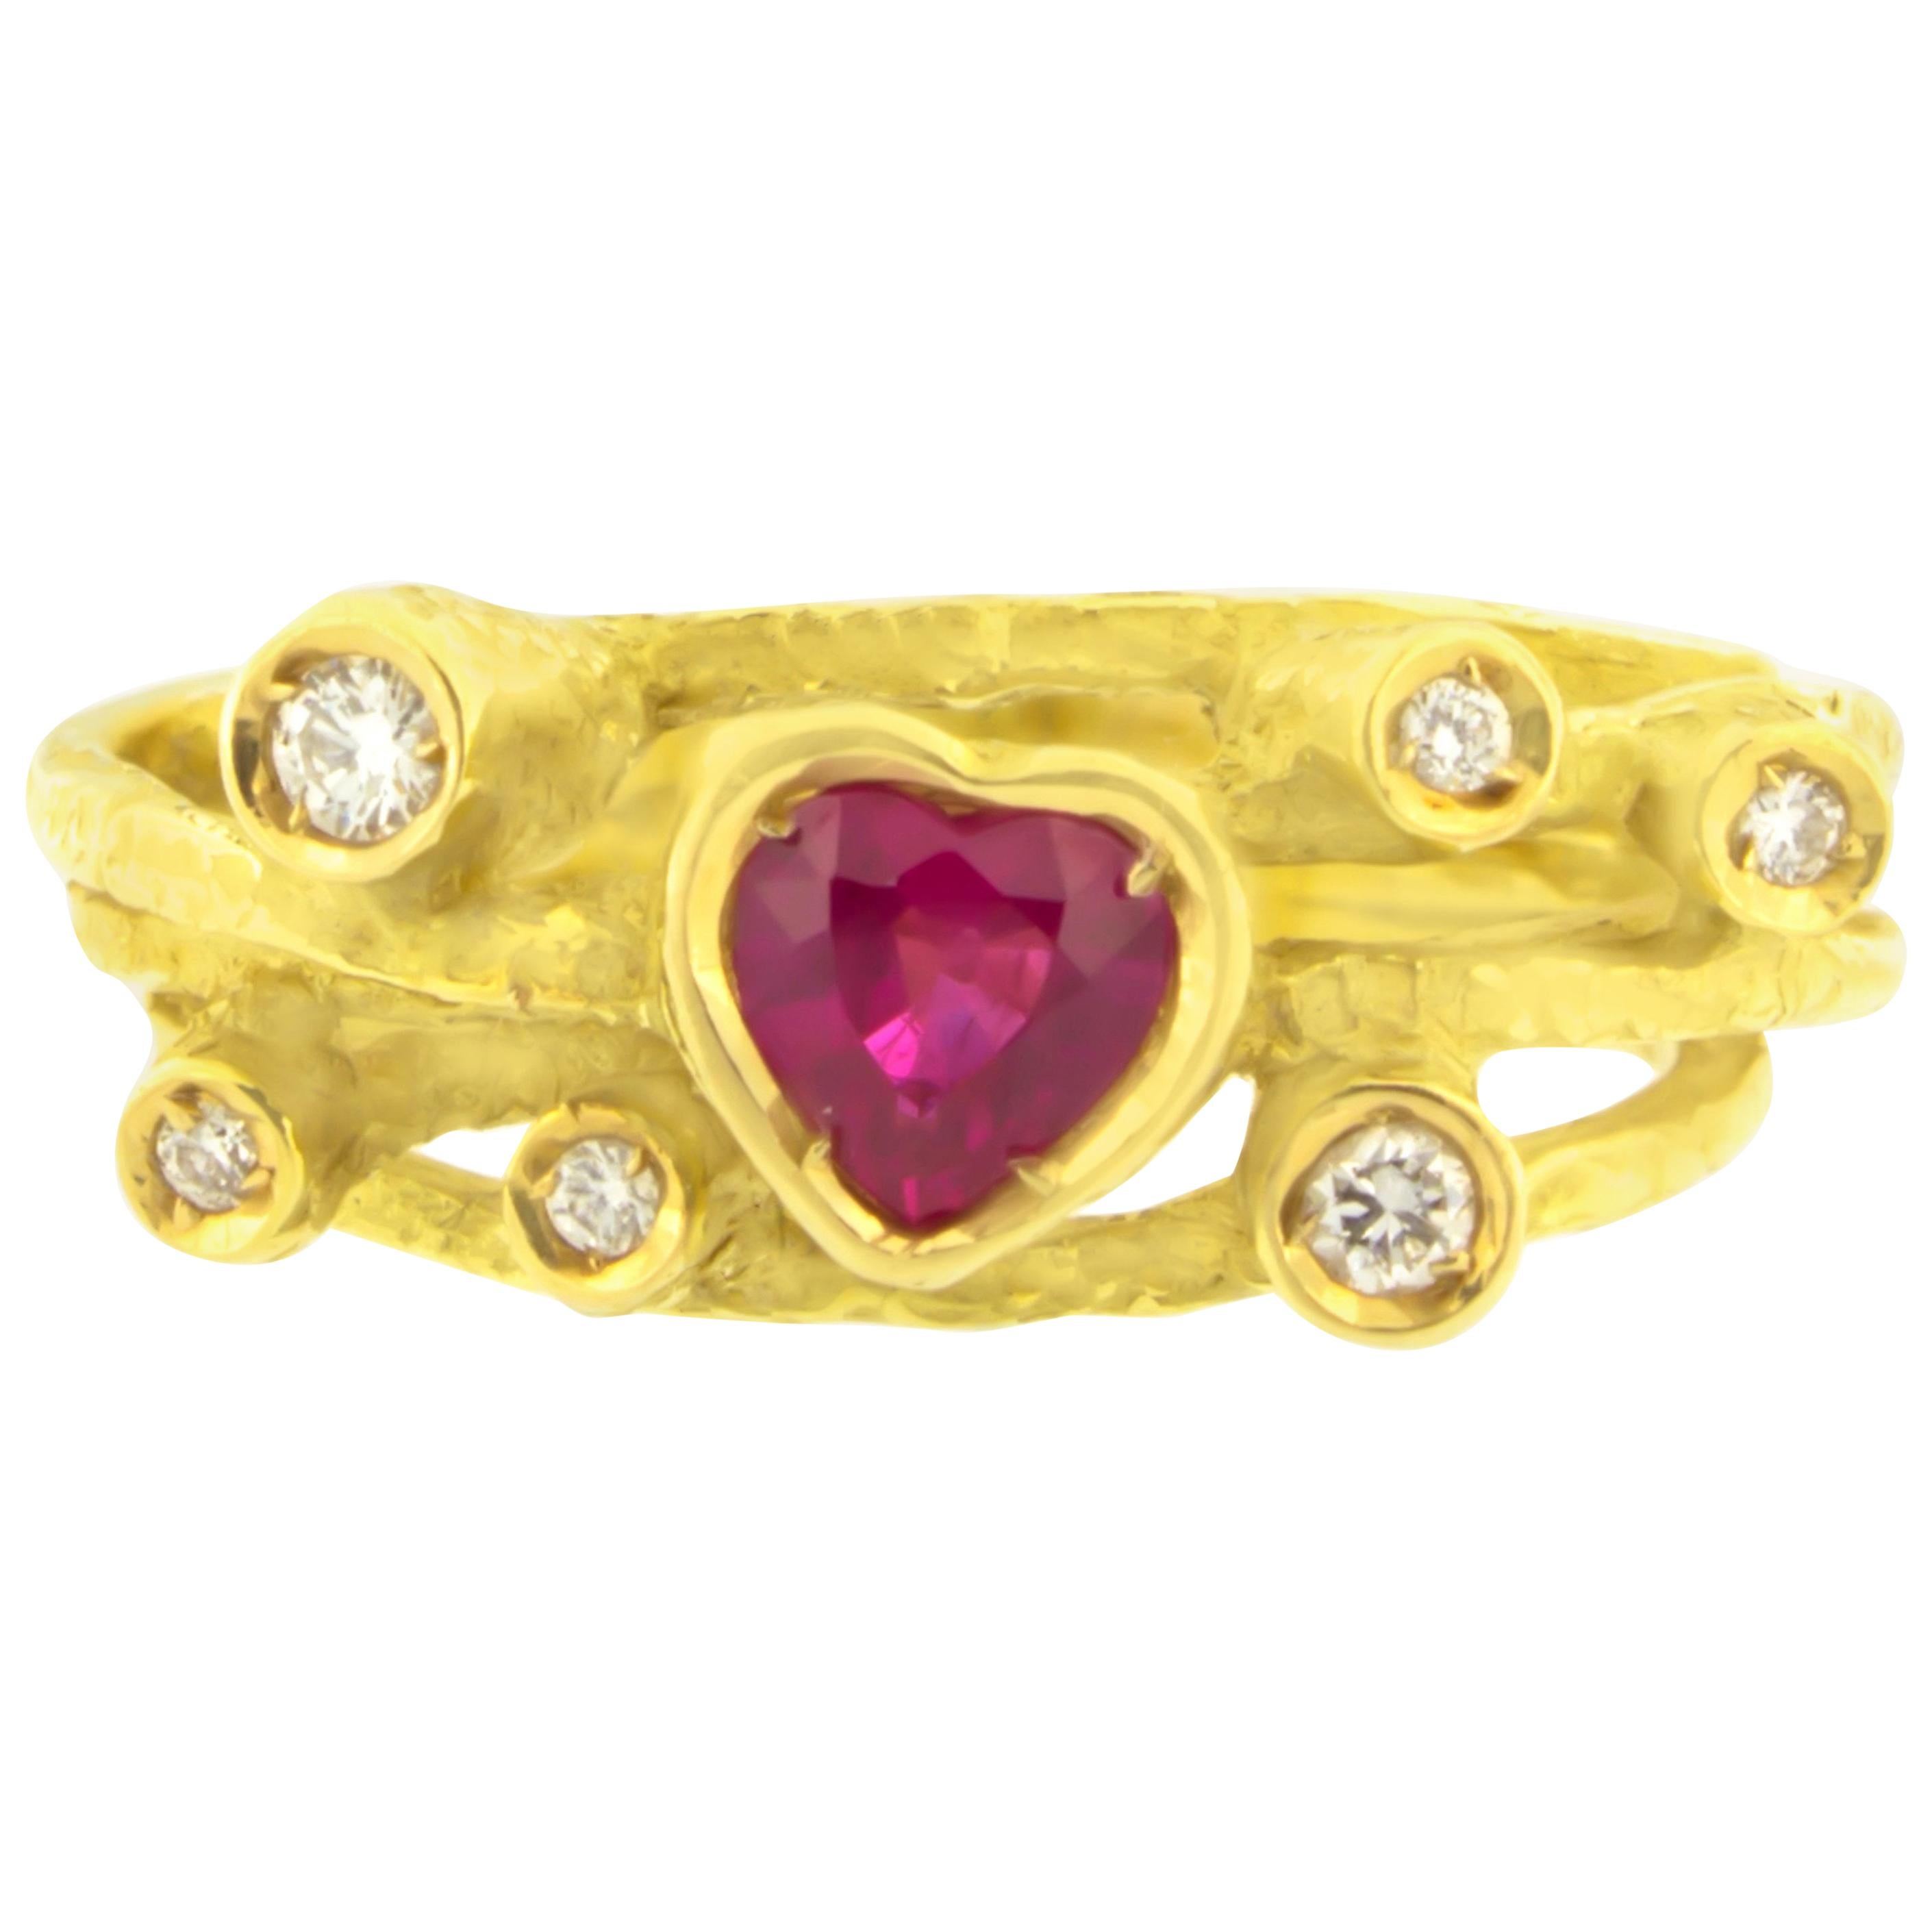 Sacchi Heart Ruby and Diamonds Gemstone Cocktail Ring 18 Karat Yellow Gold